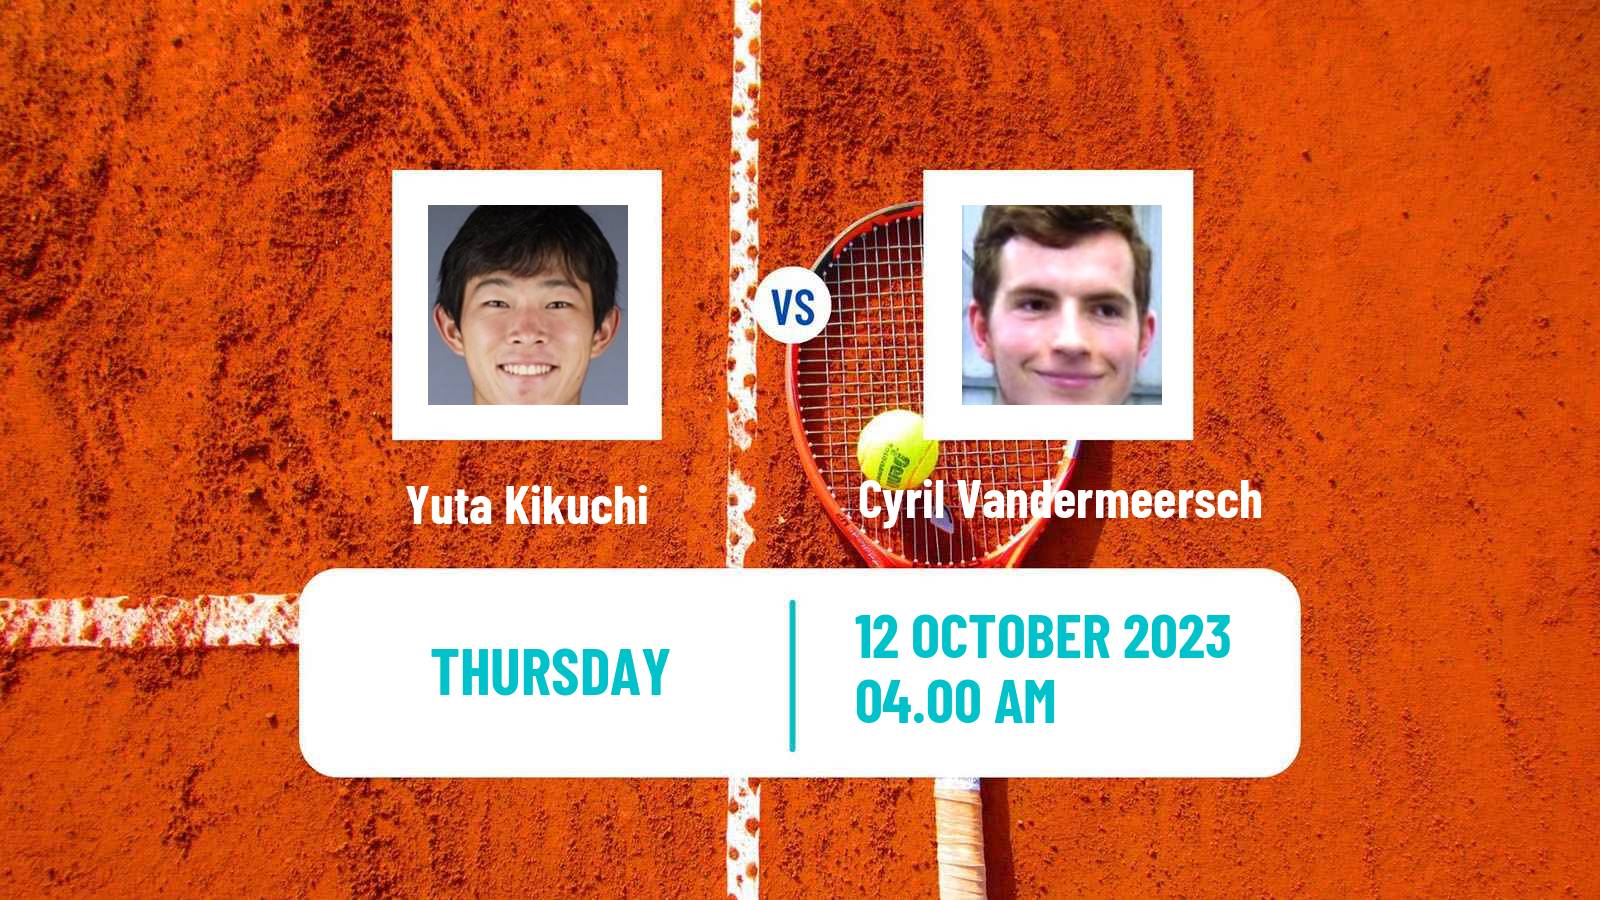 Tennis ITF M15 Monastir 41 Men Yuta Kikuchi - Cyril Vandermeersch